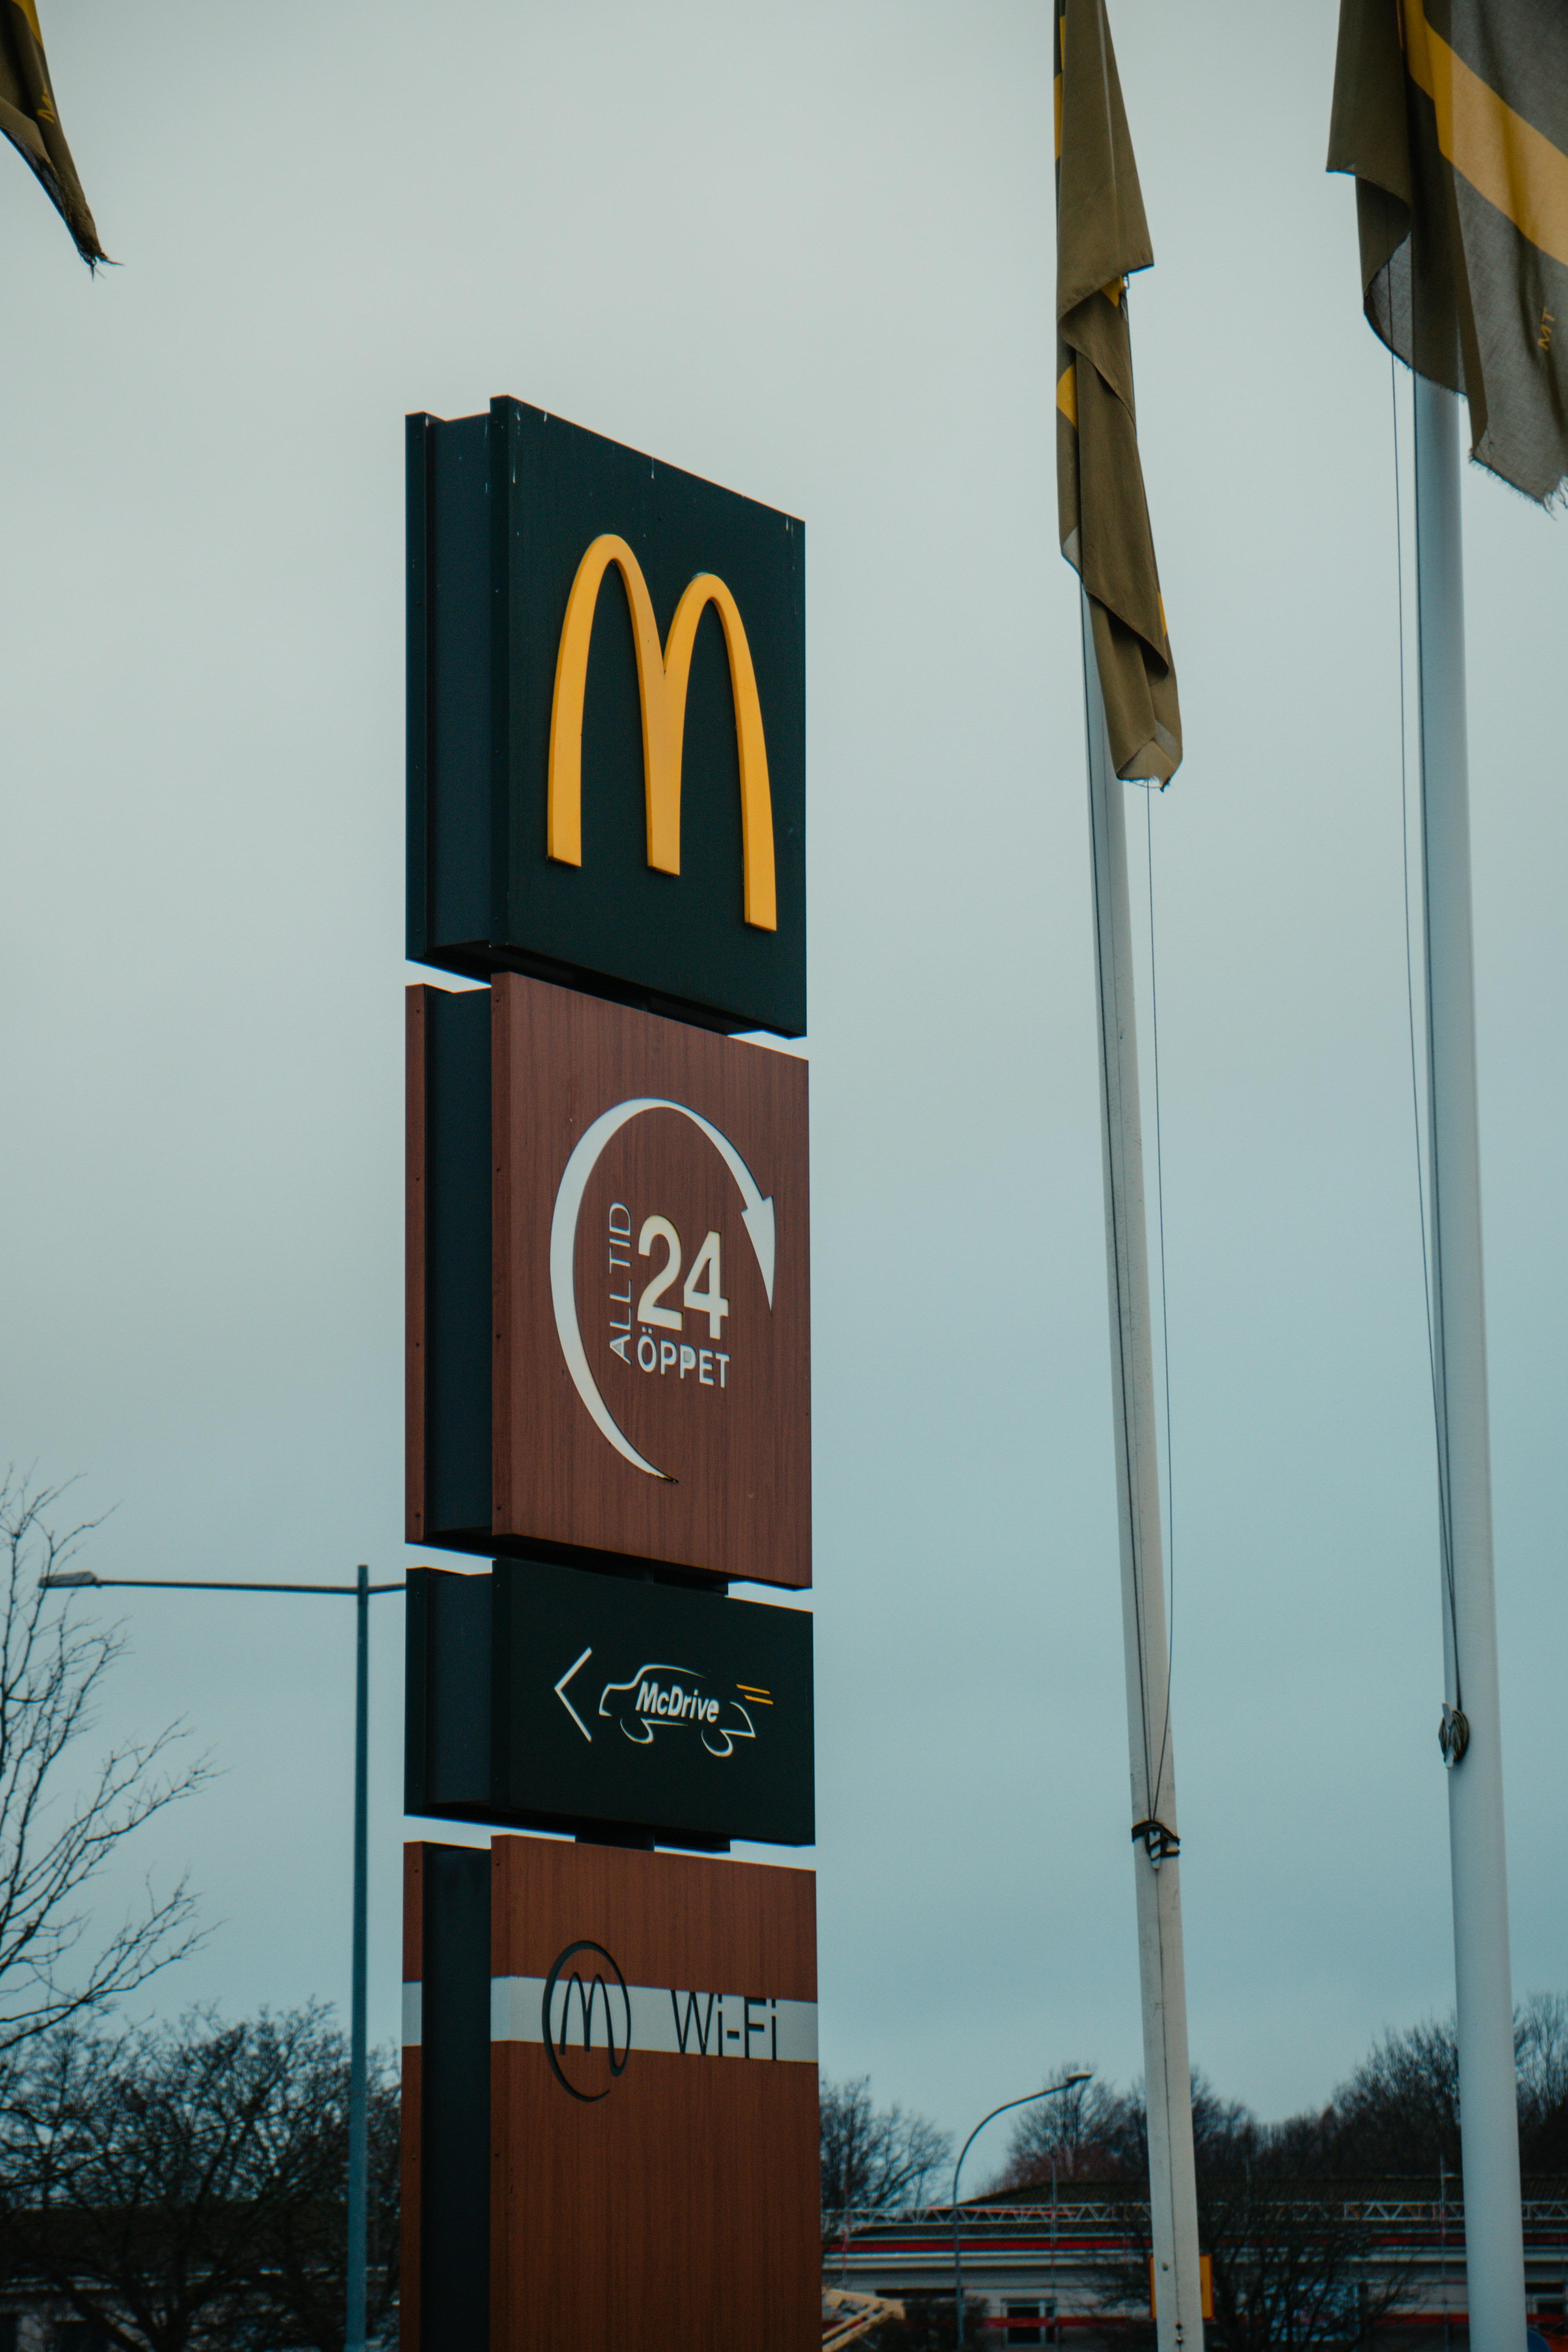 US Muslim consumers' favorite fast food is McDonald's